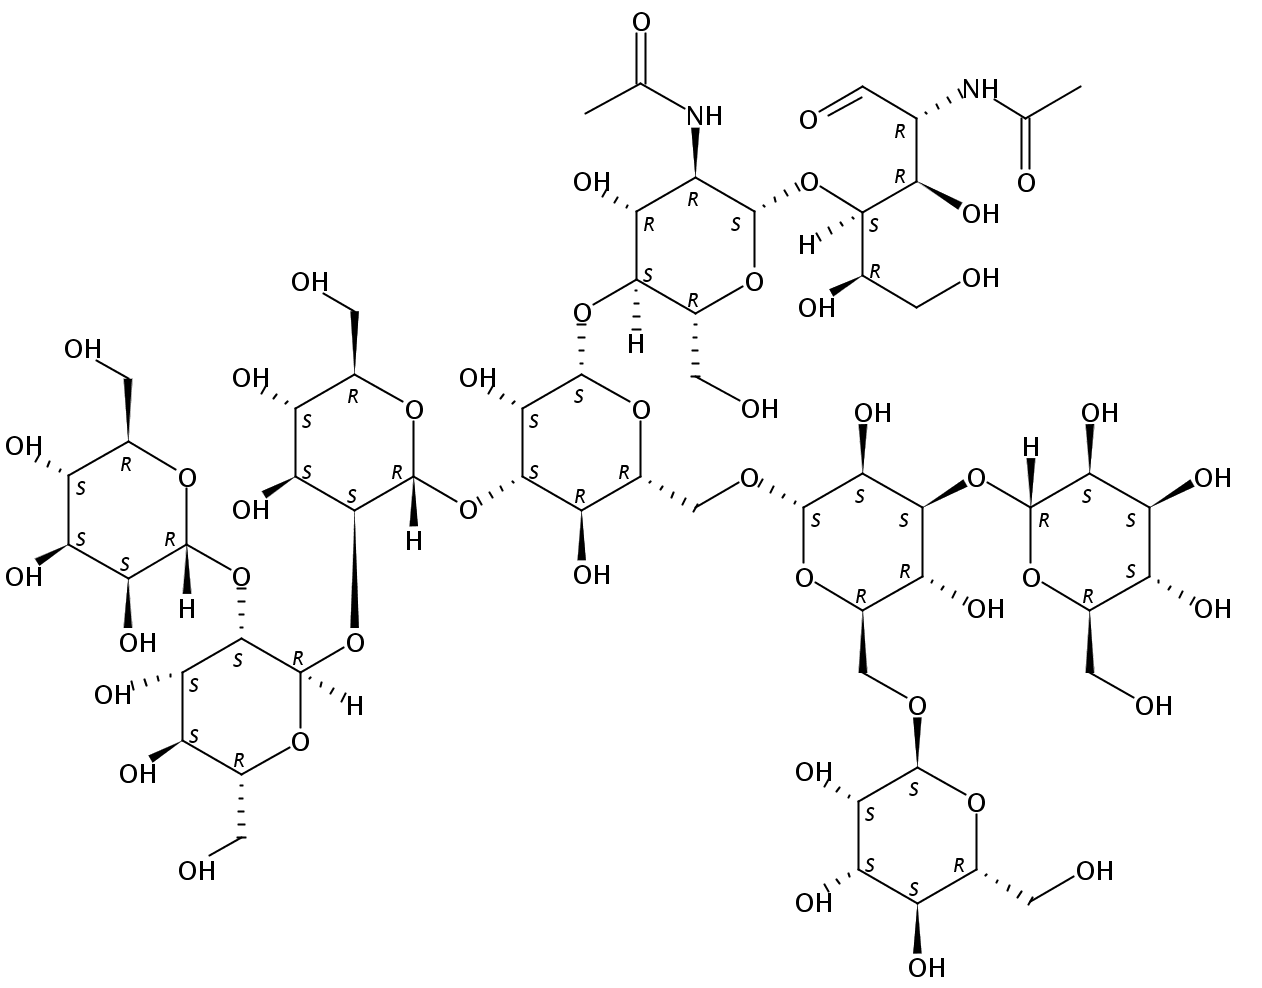 Oligomannose-7D1 (Man-7D1)